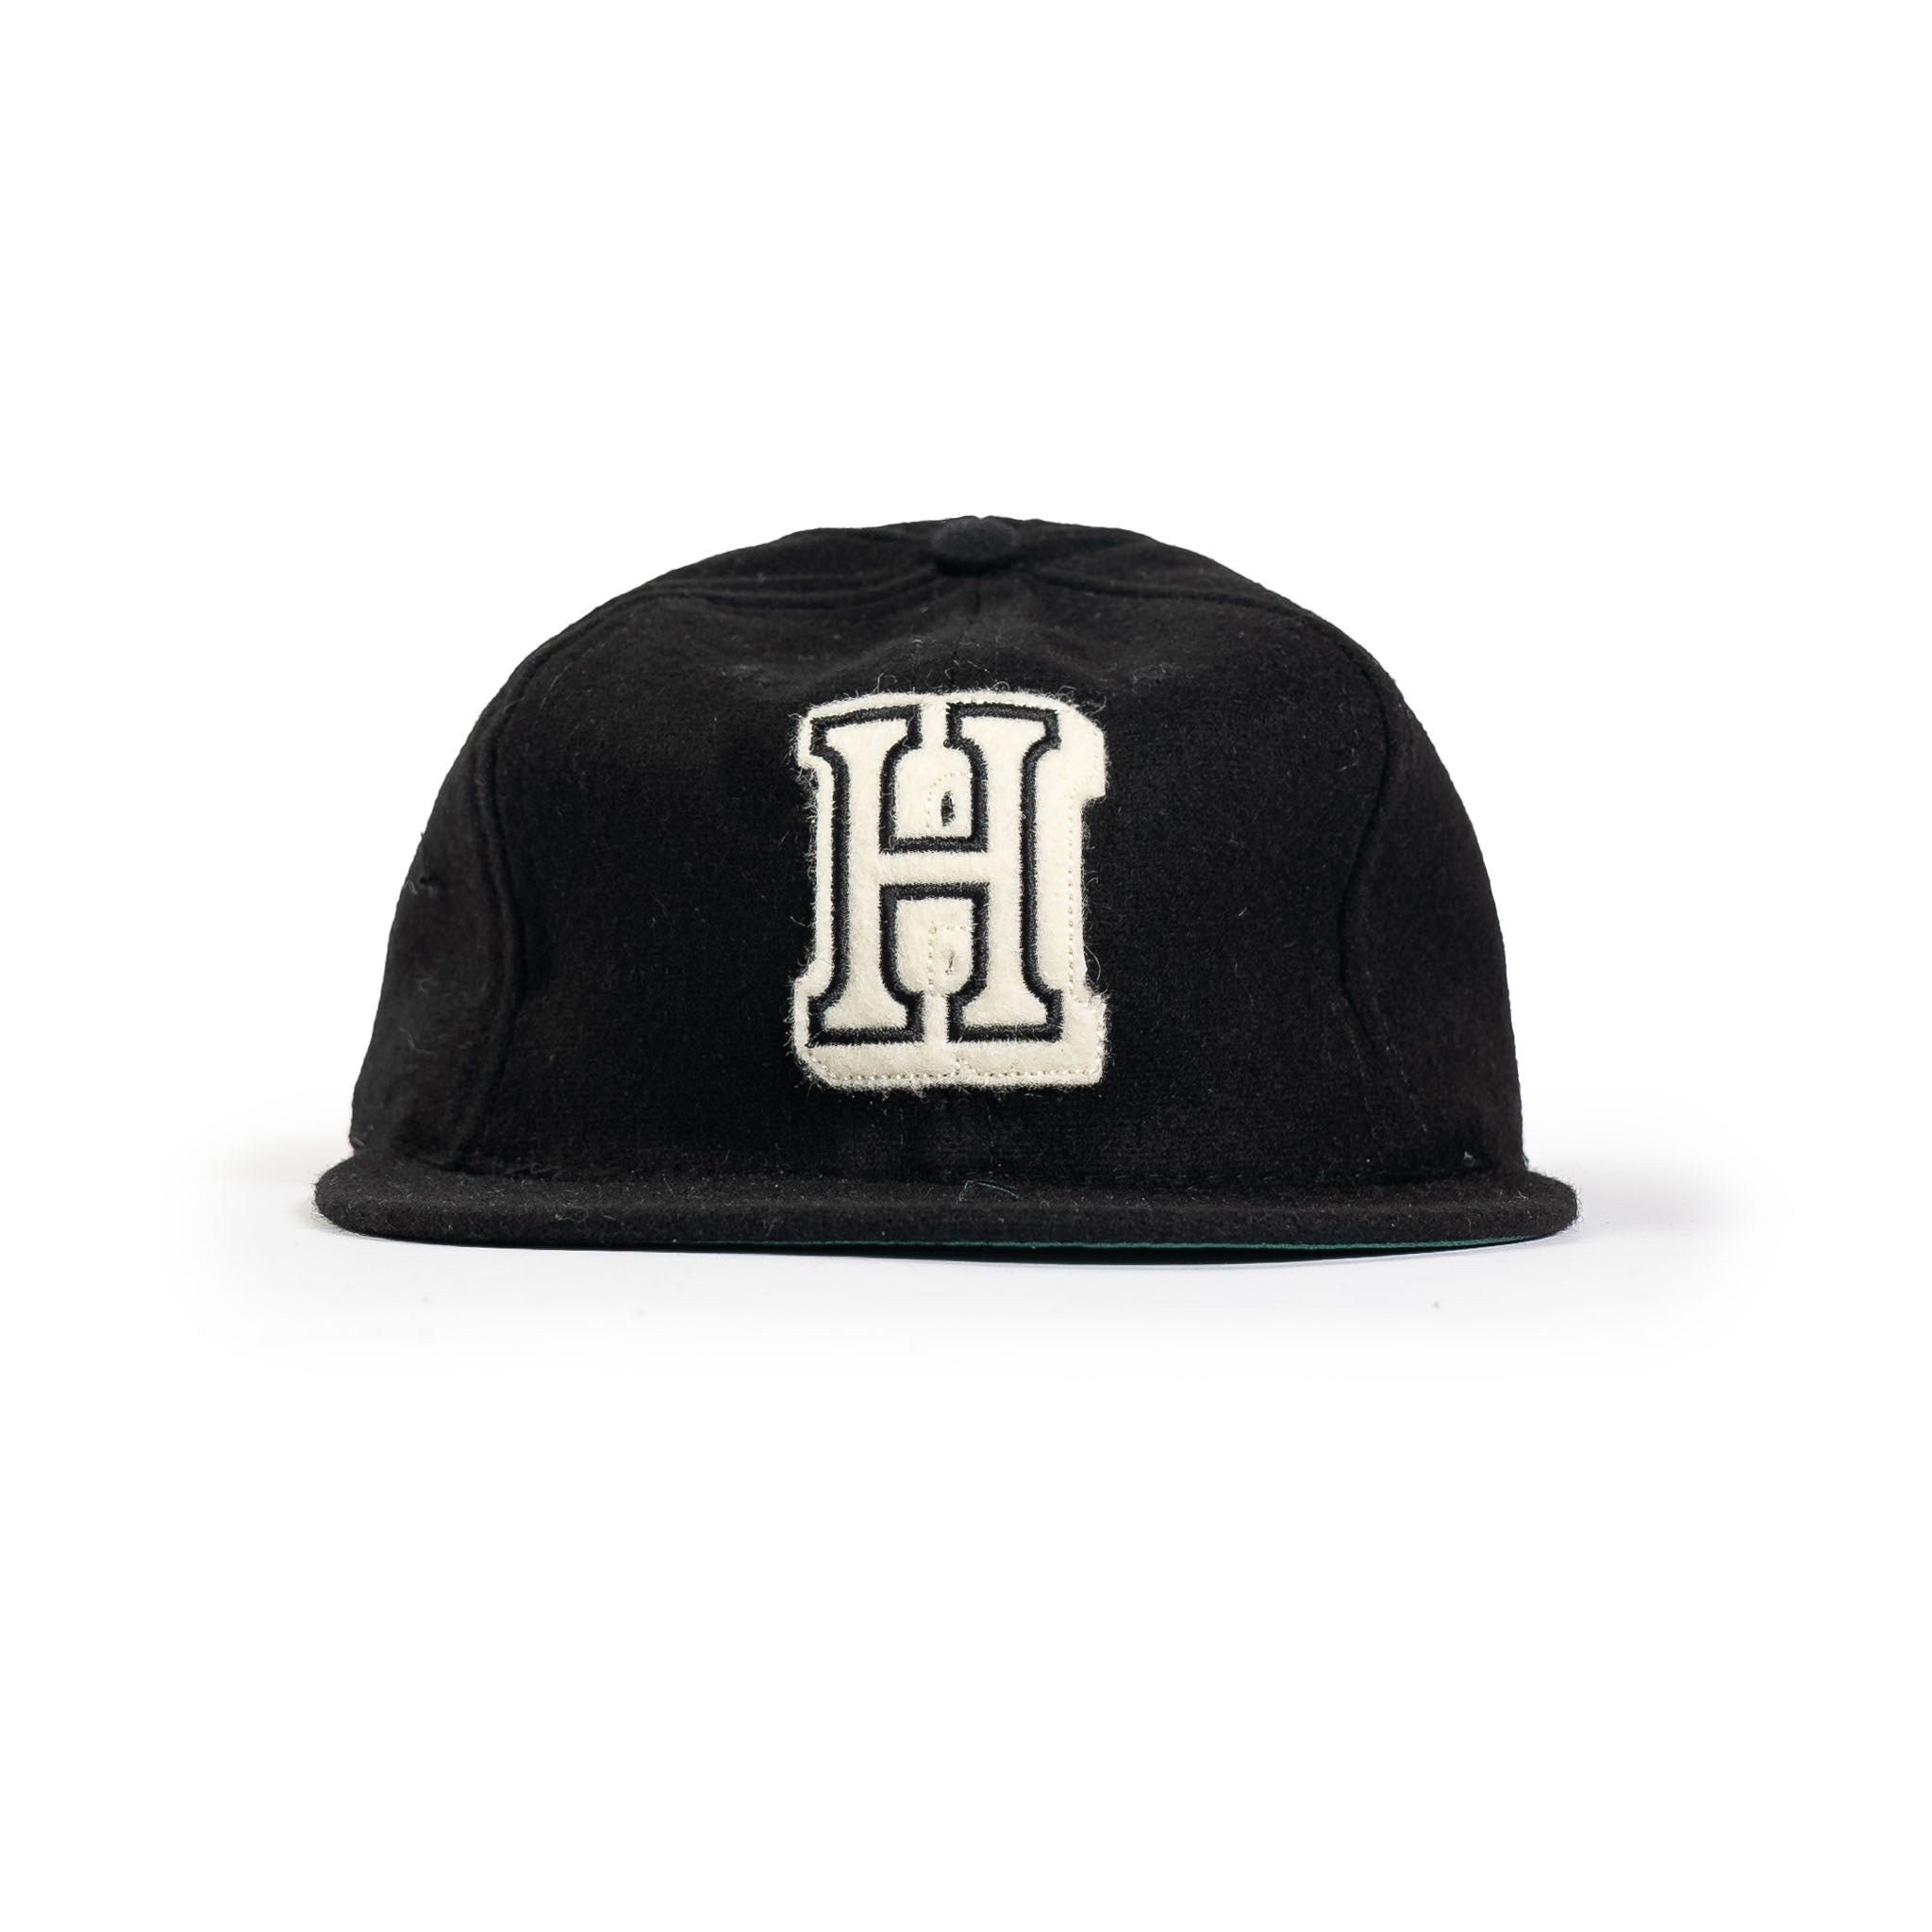 HOMETEAM H Cap by Ebbets Field